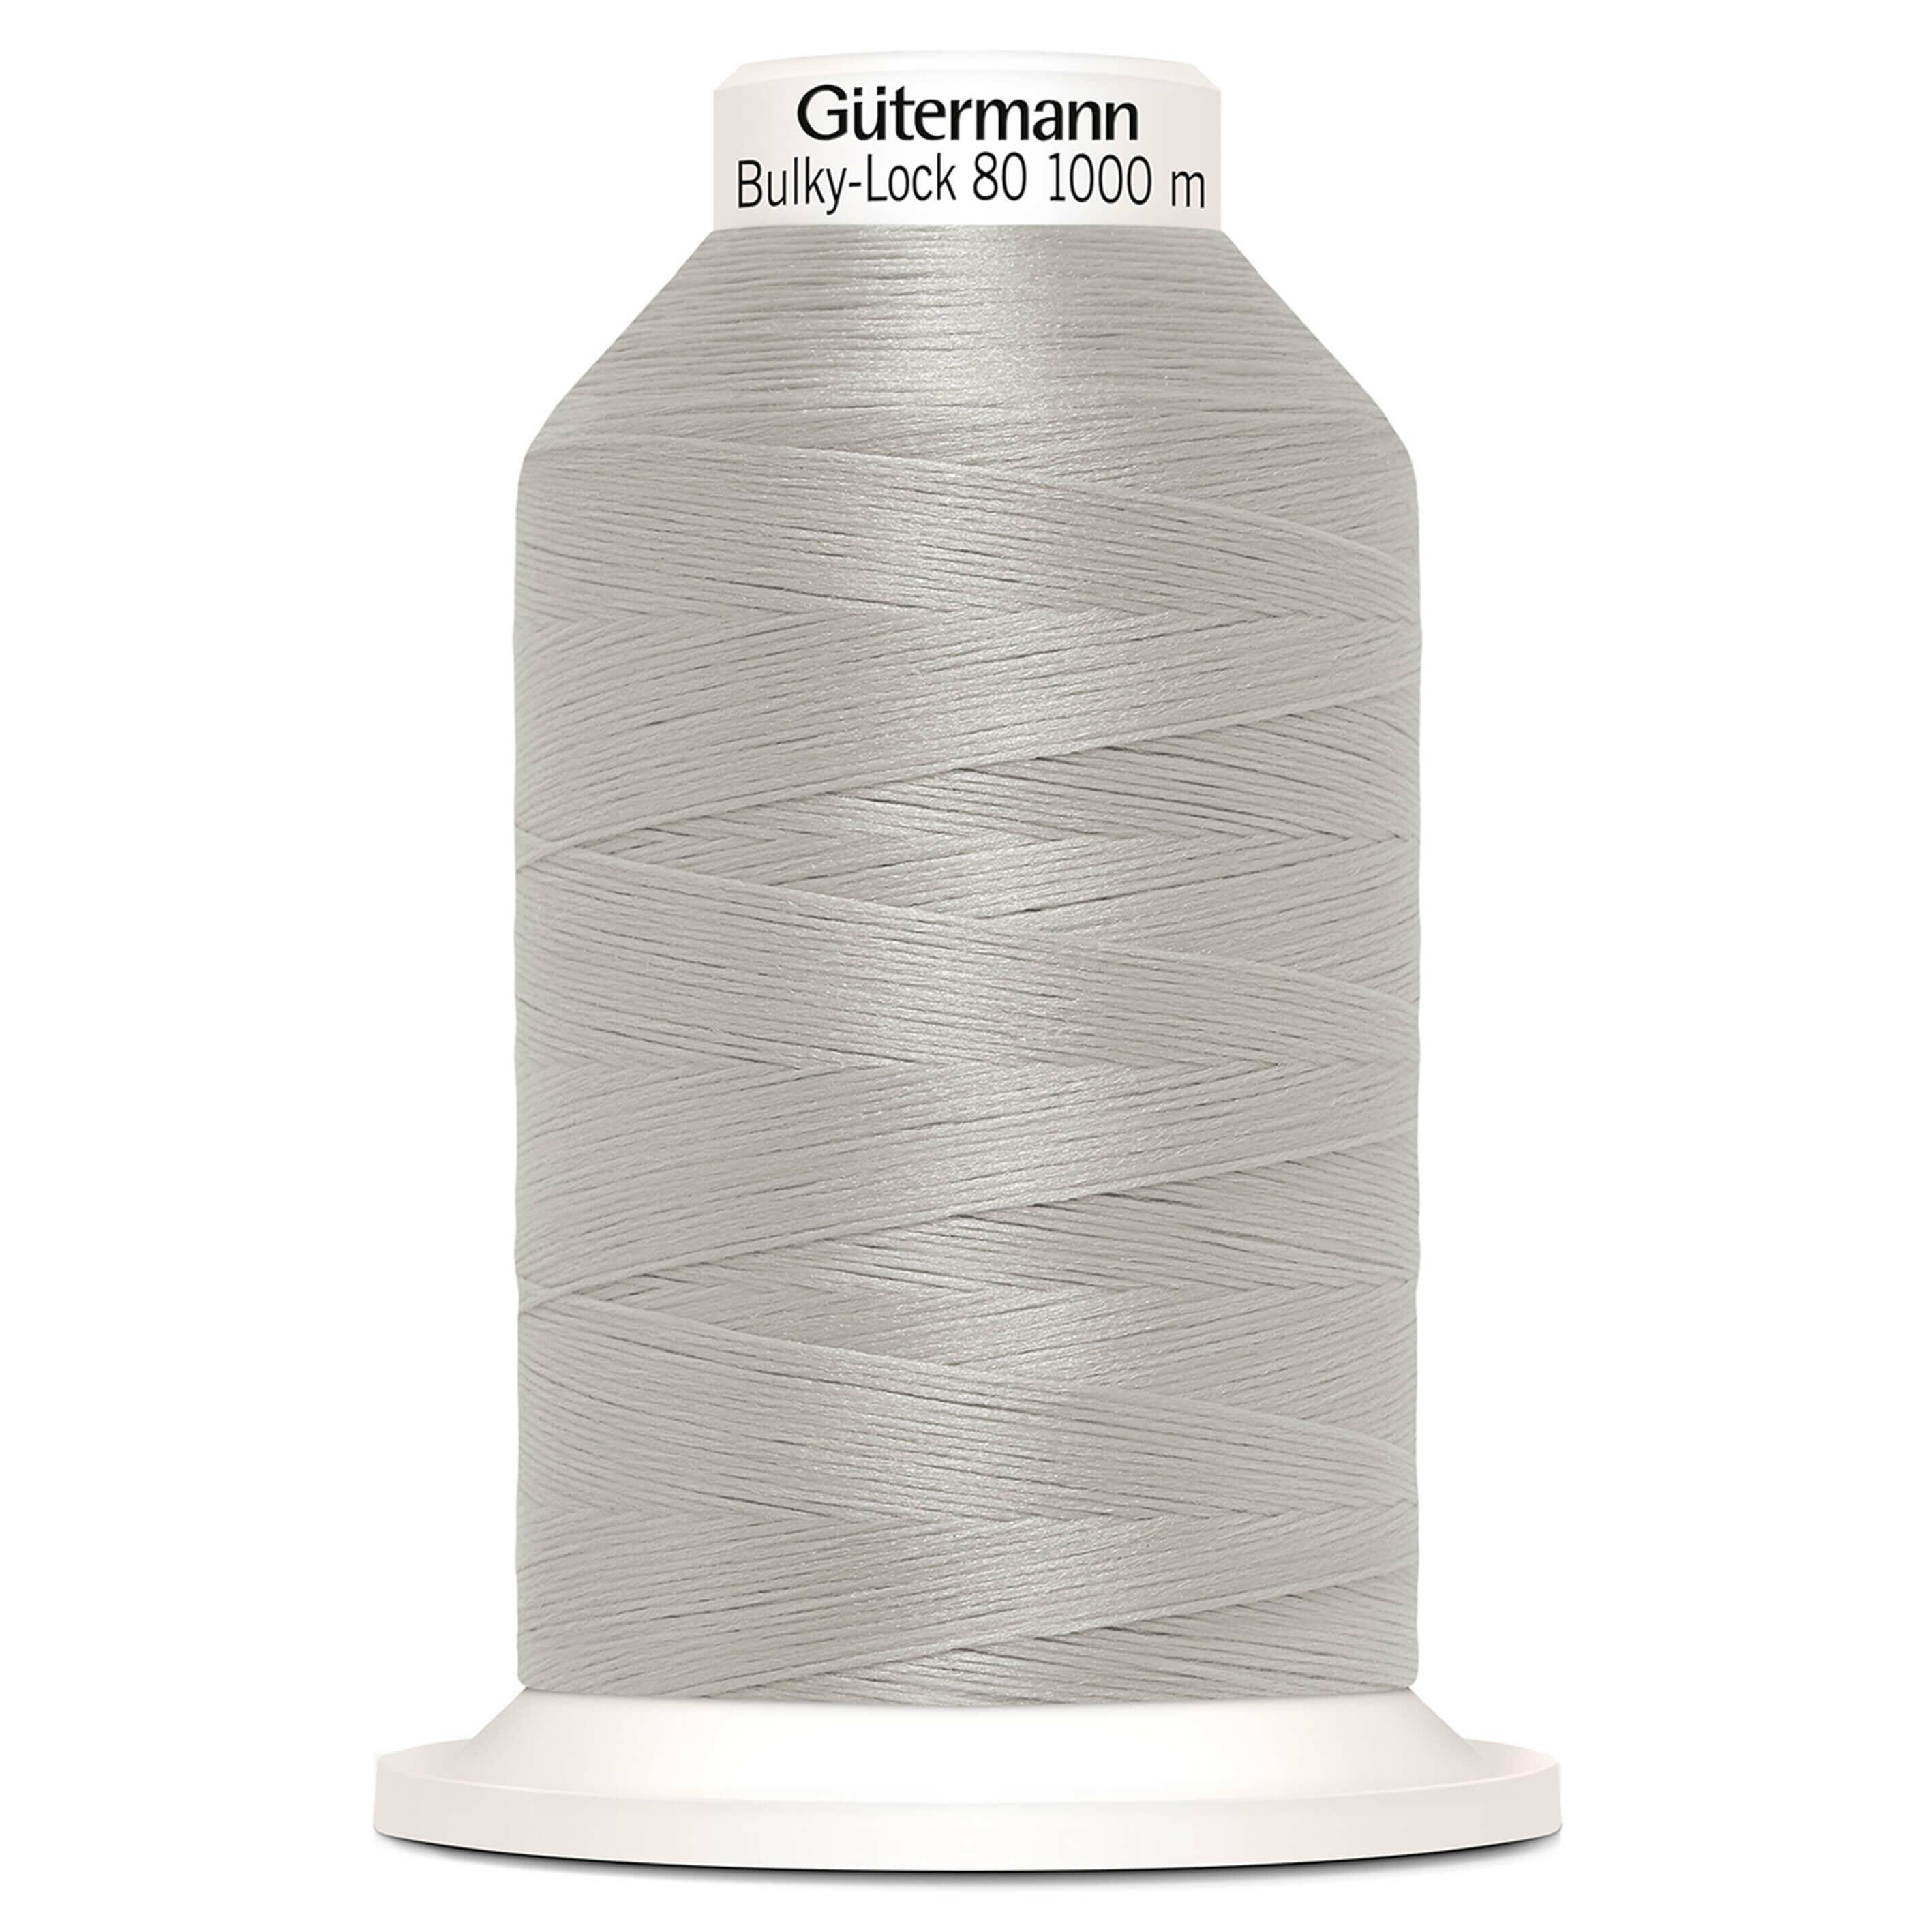 Gutermann Bulky Lock 80 overlocking thread in colour 038 Fog Grey